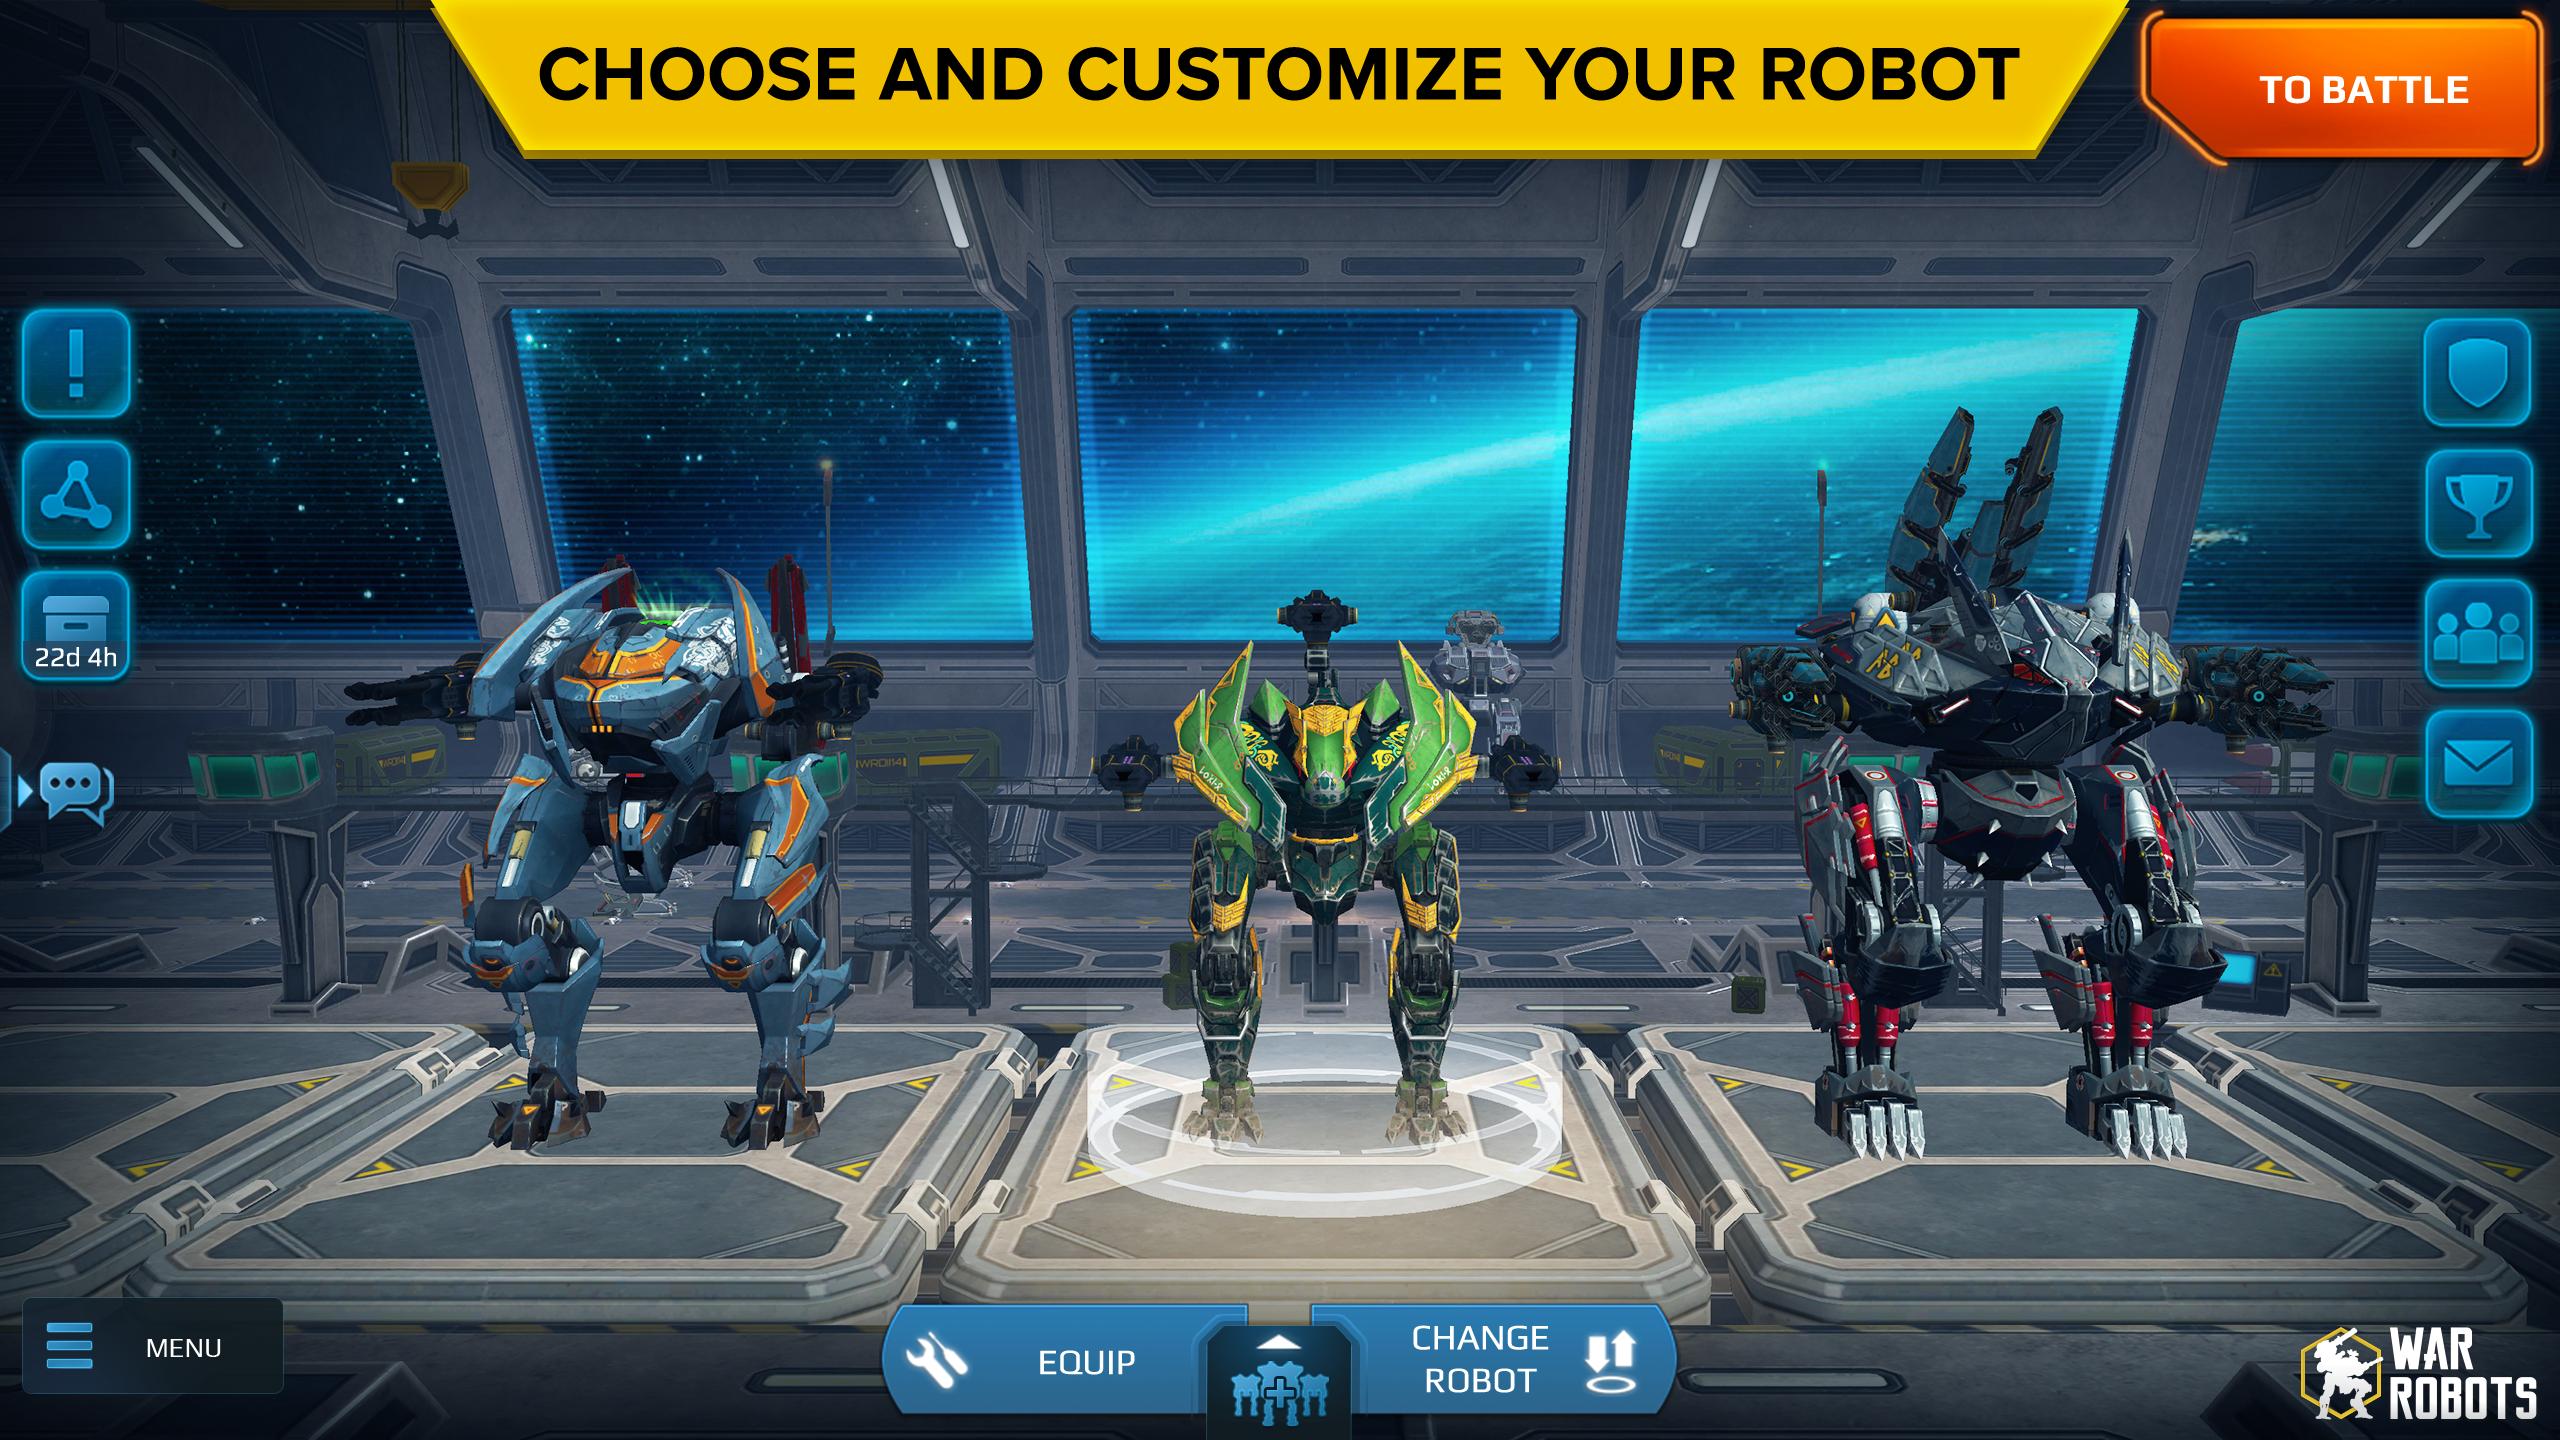 War Robots. 6v6 Tactical Multiplayer Battles for Android ... - 